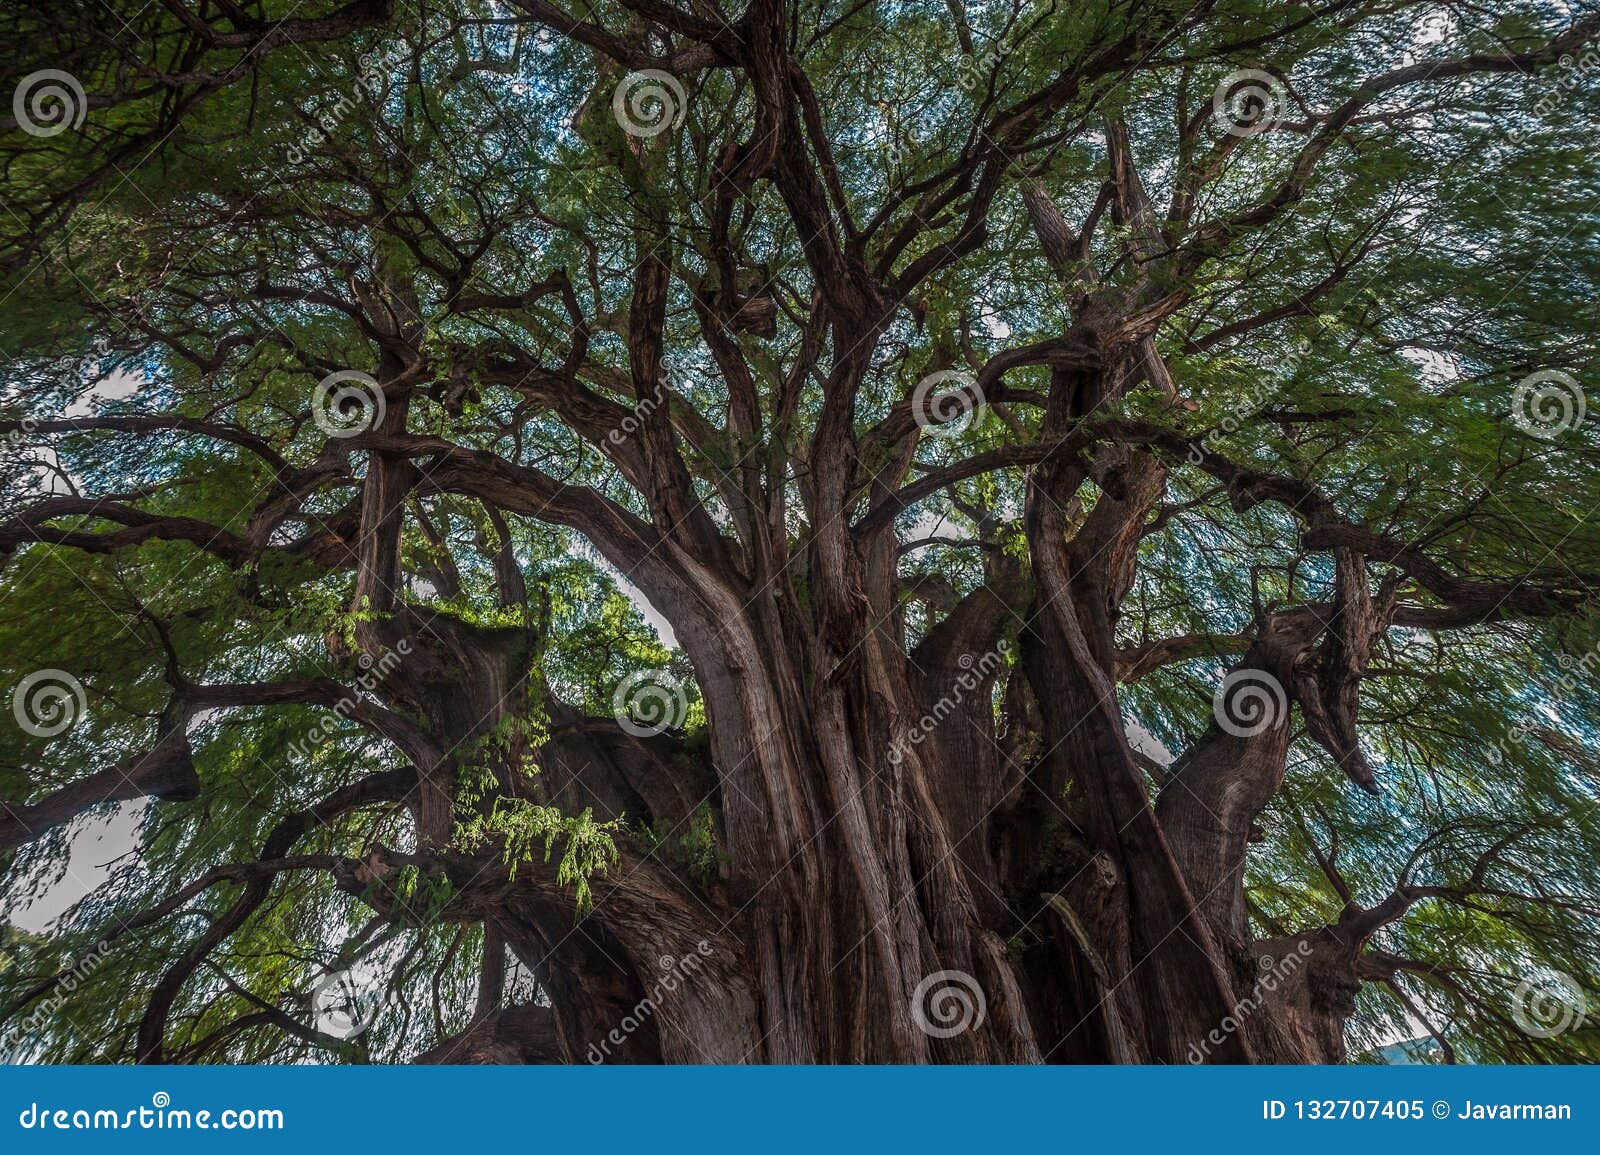 arbol del tule, a giant sacred tree in tule, oaxaca, mexico